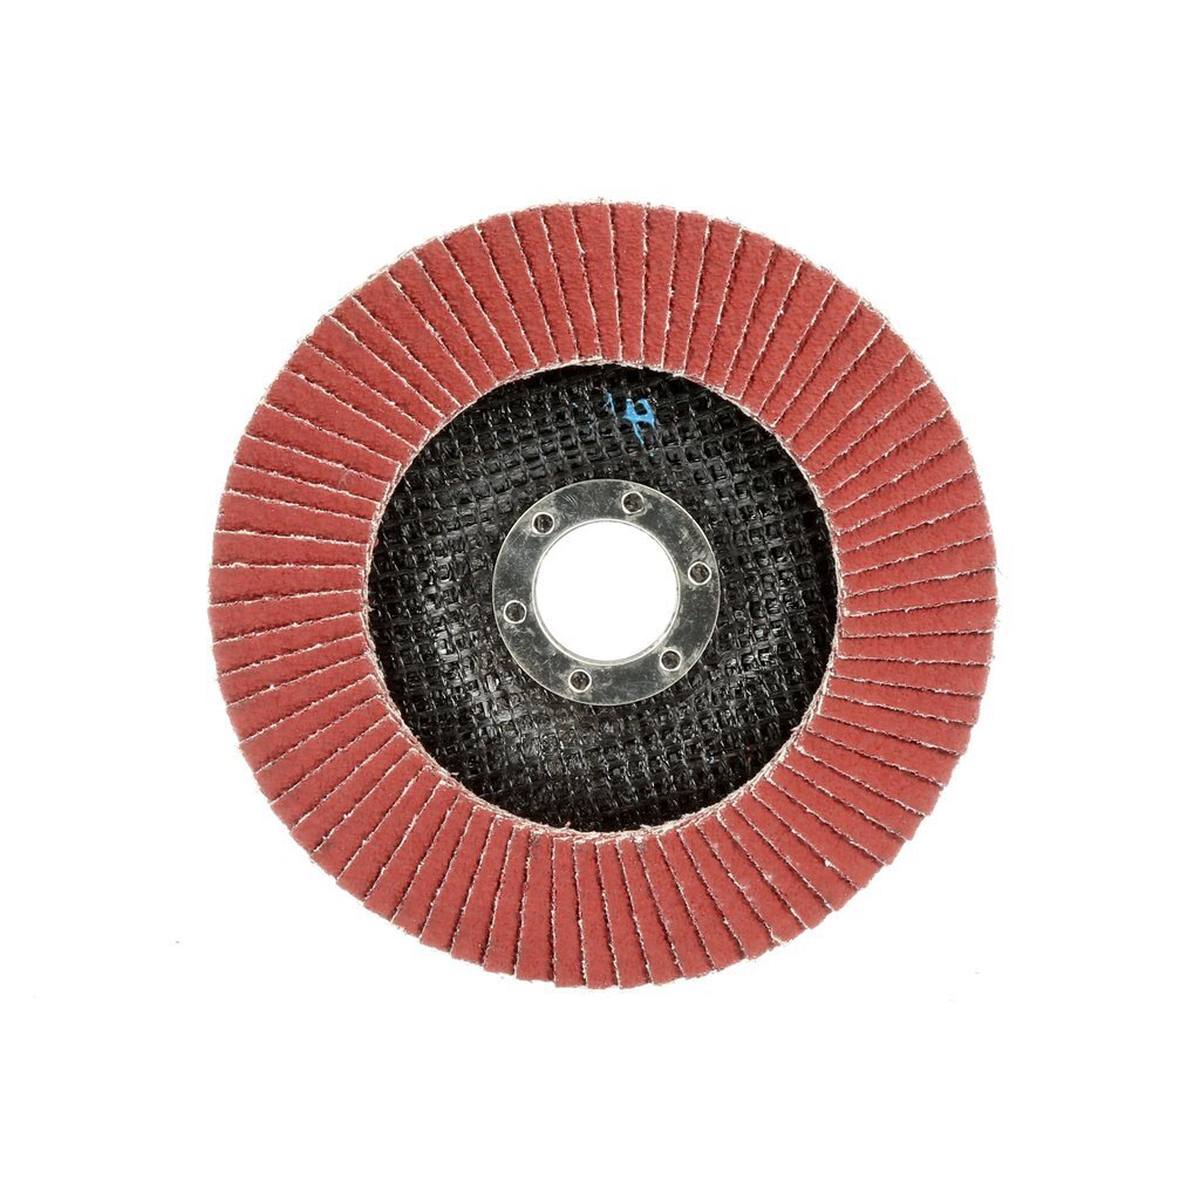 3M 969F Cubitron II flap discs d=115mm P40+ #51465 conical